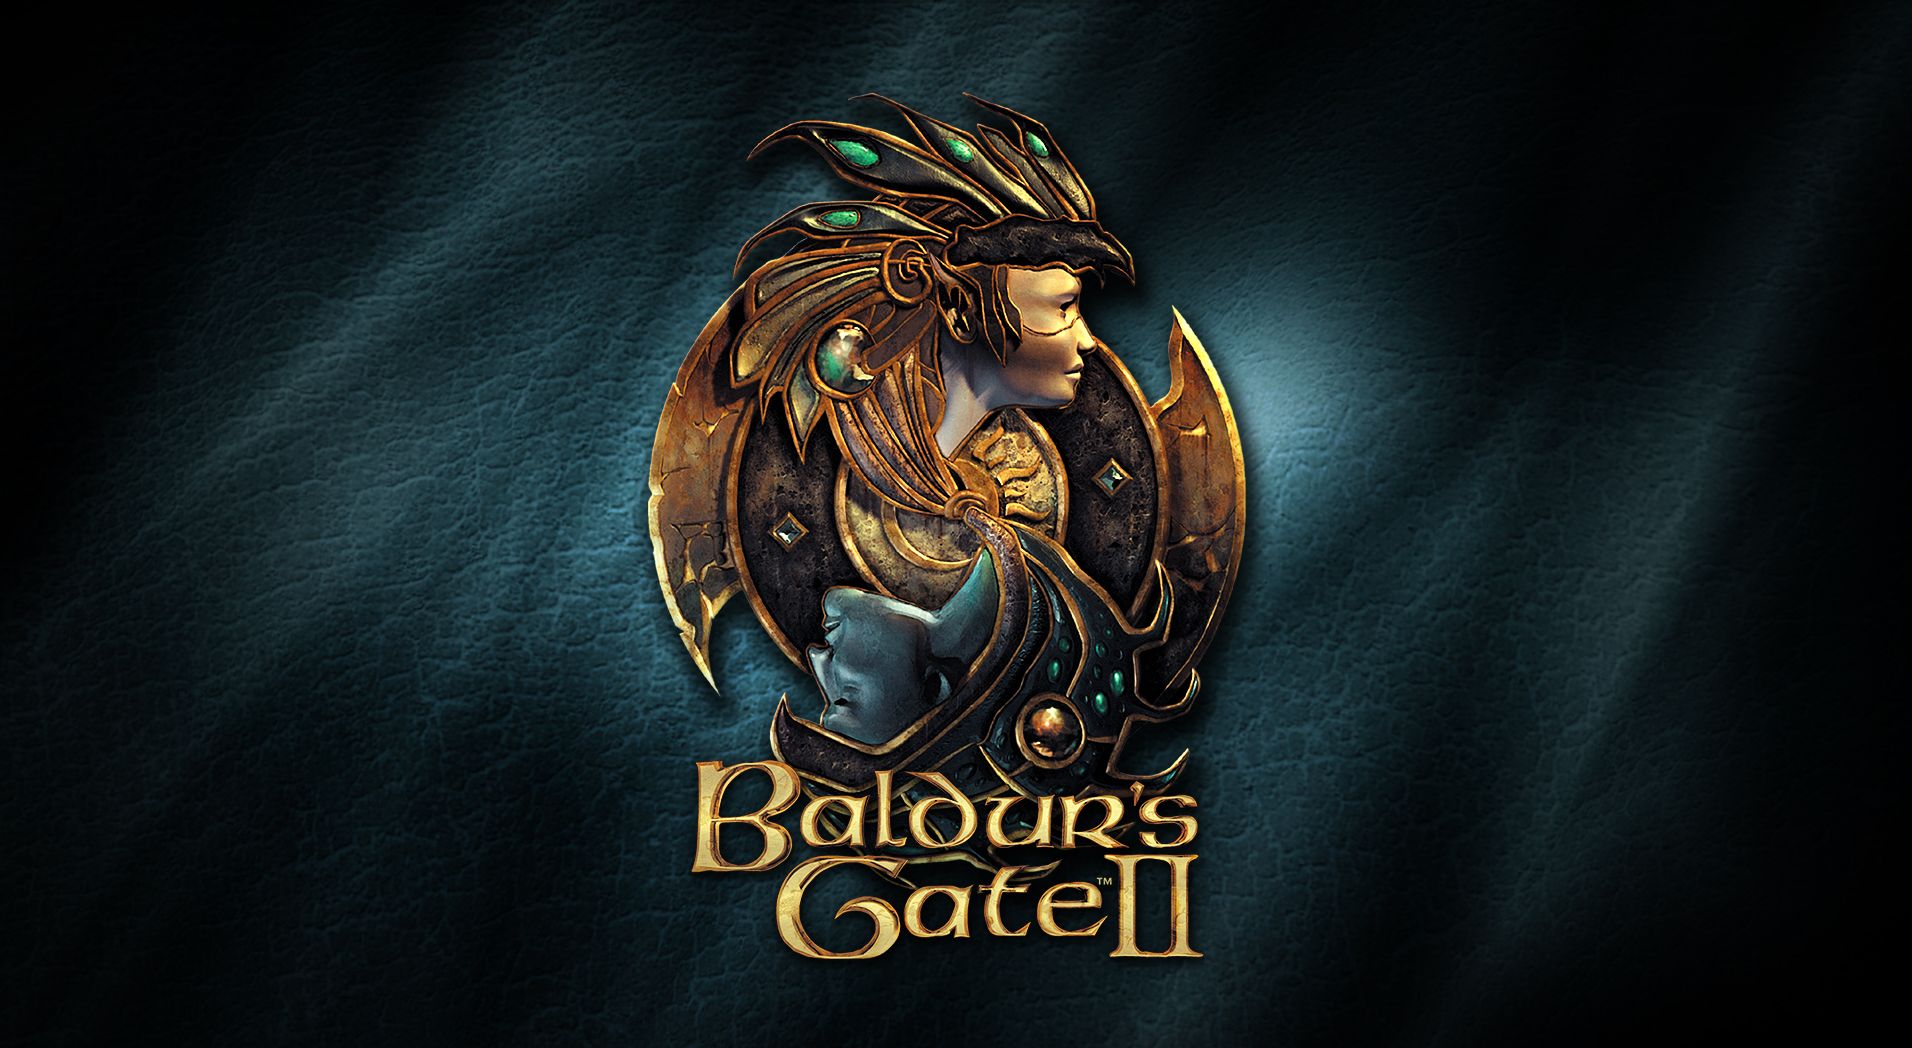 download the new Baldur